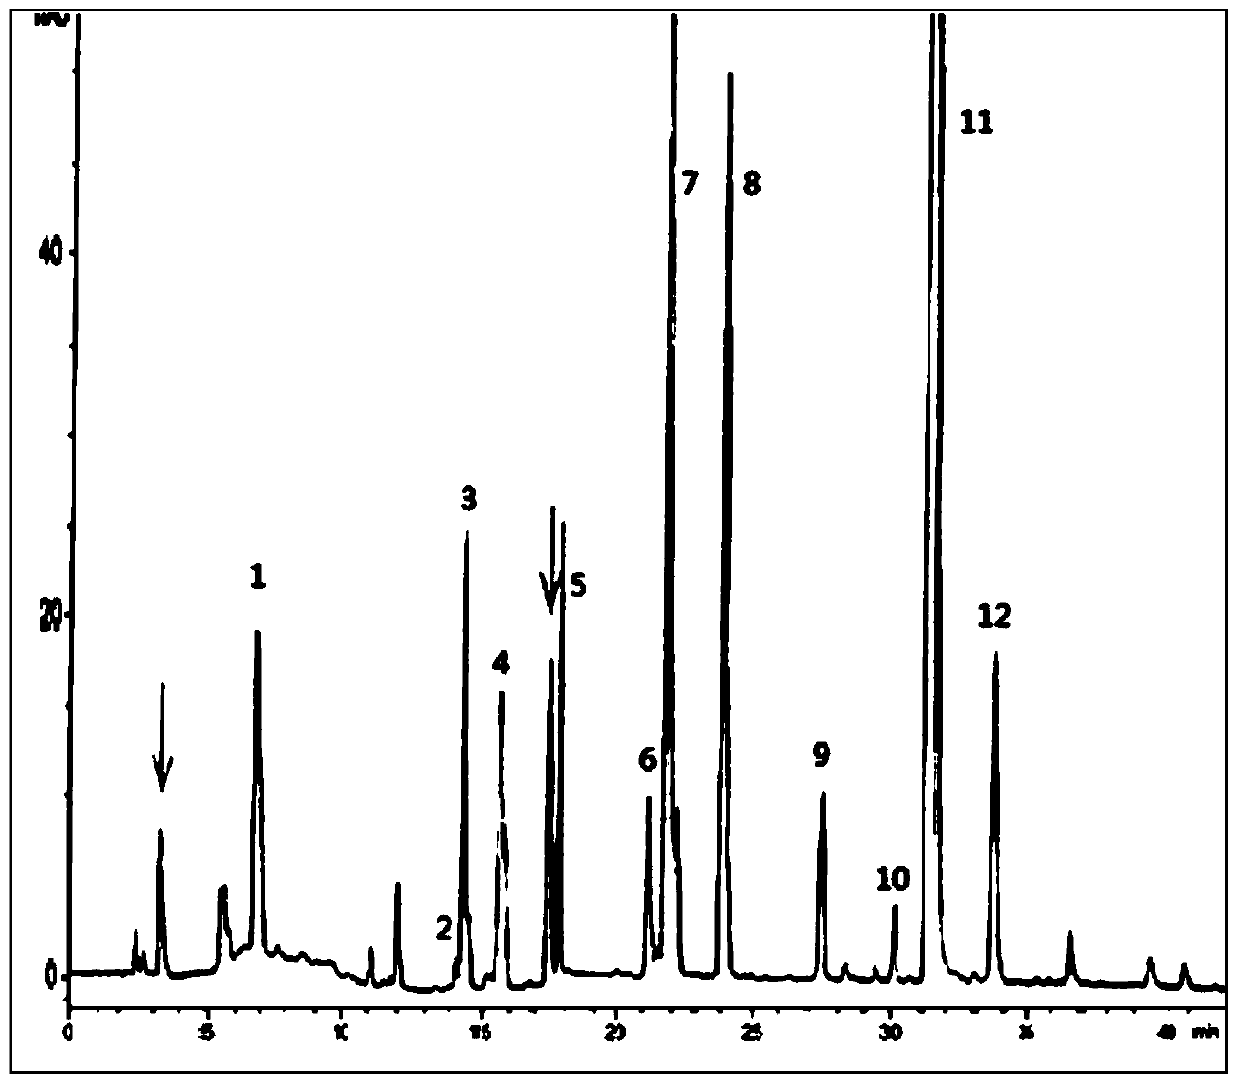 Production method of enoxaparin sodium